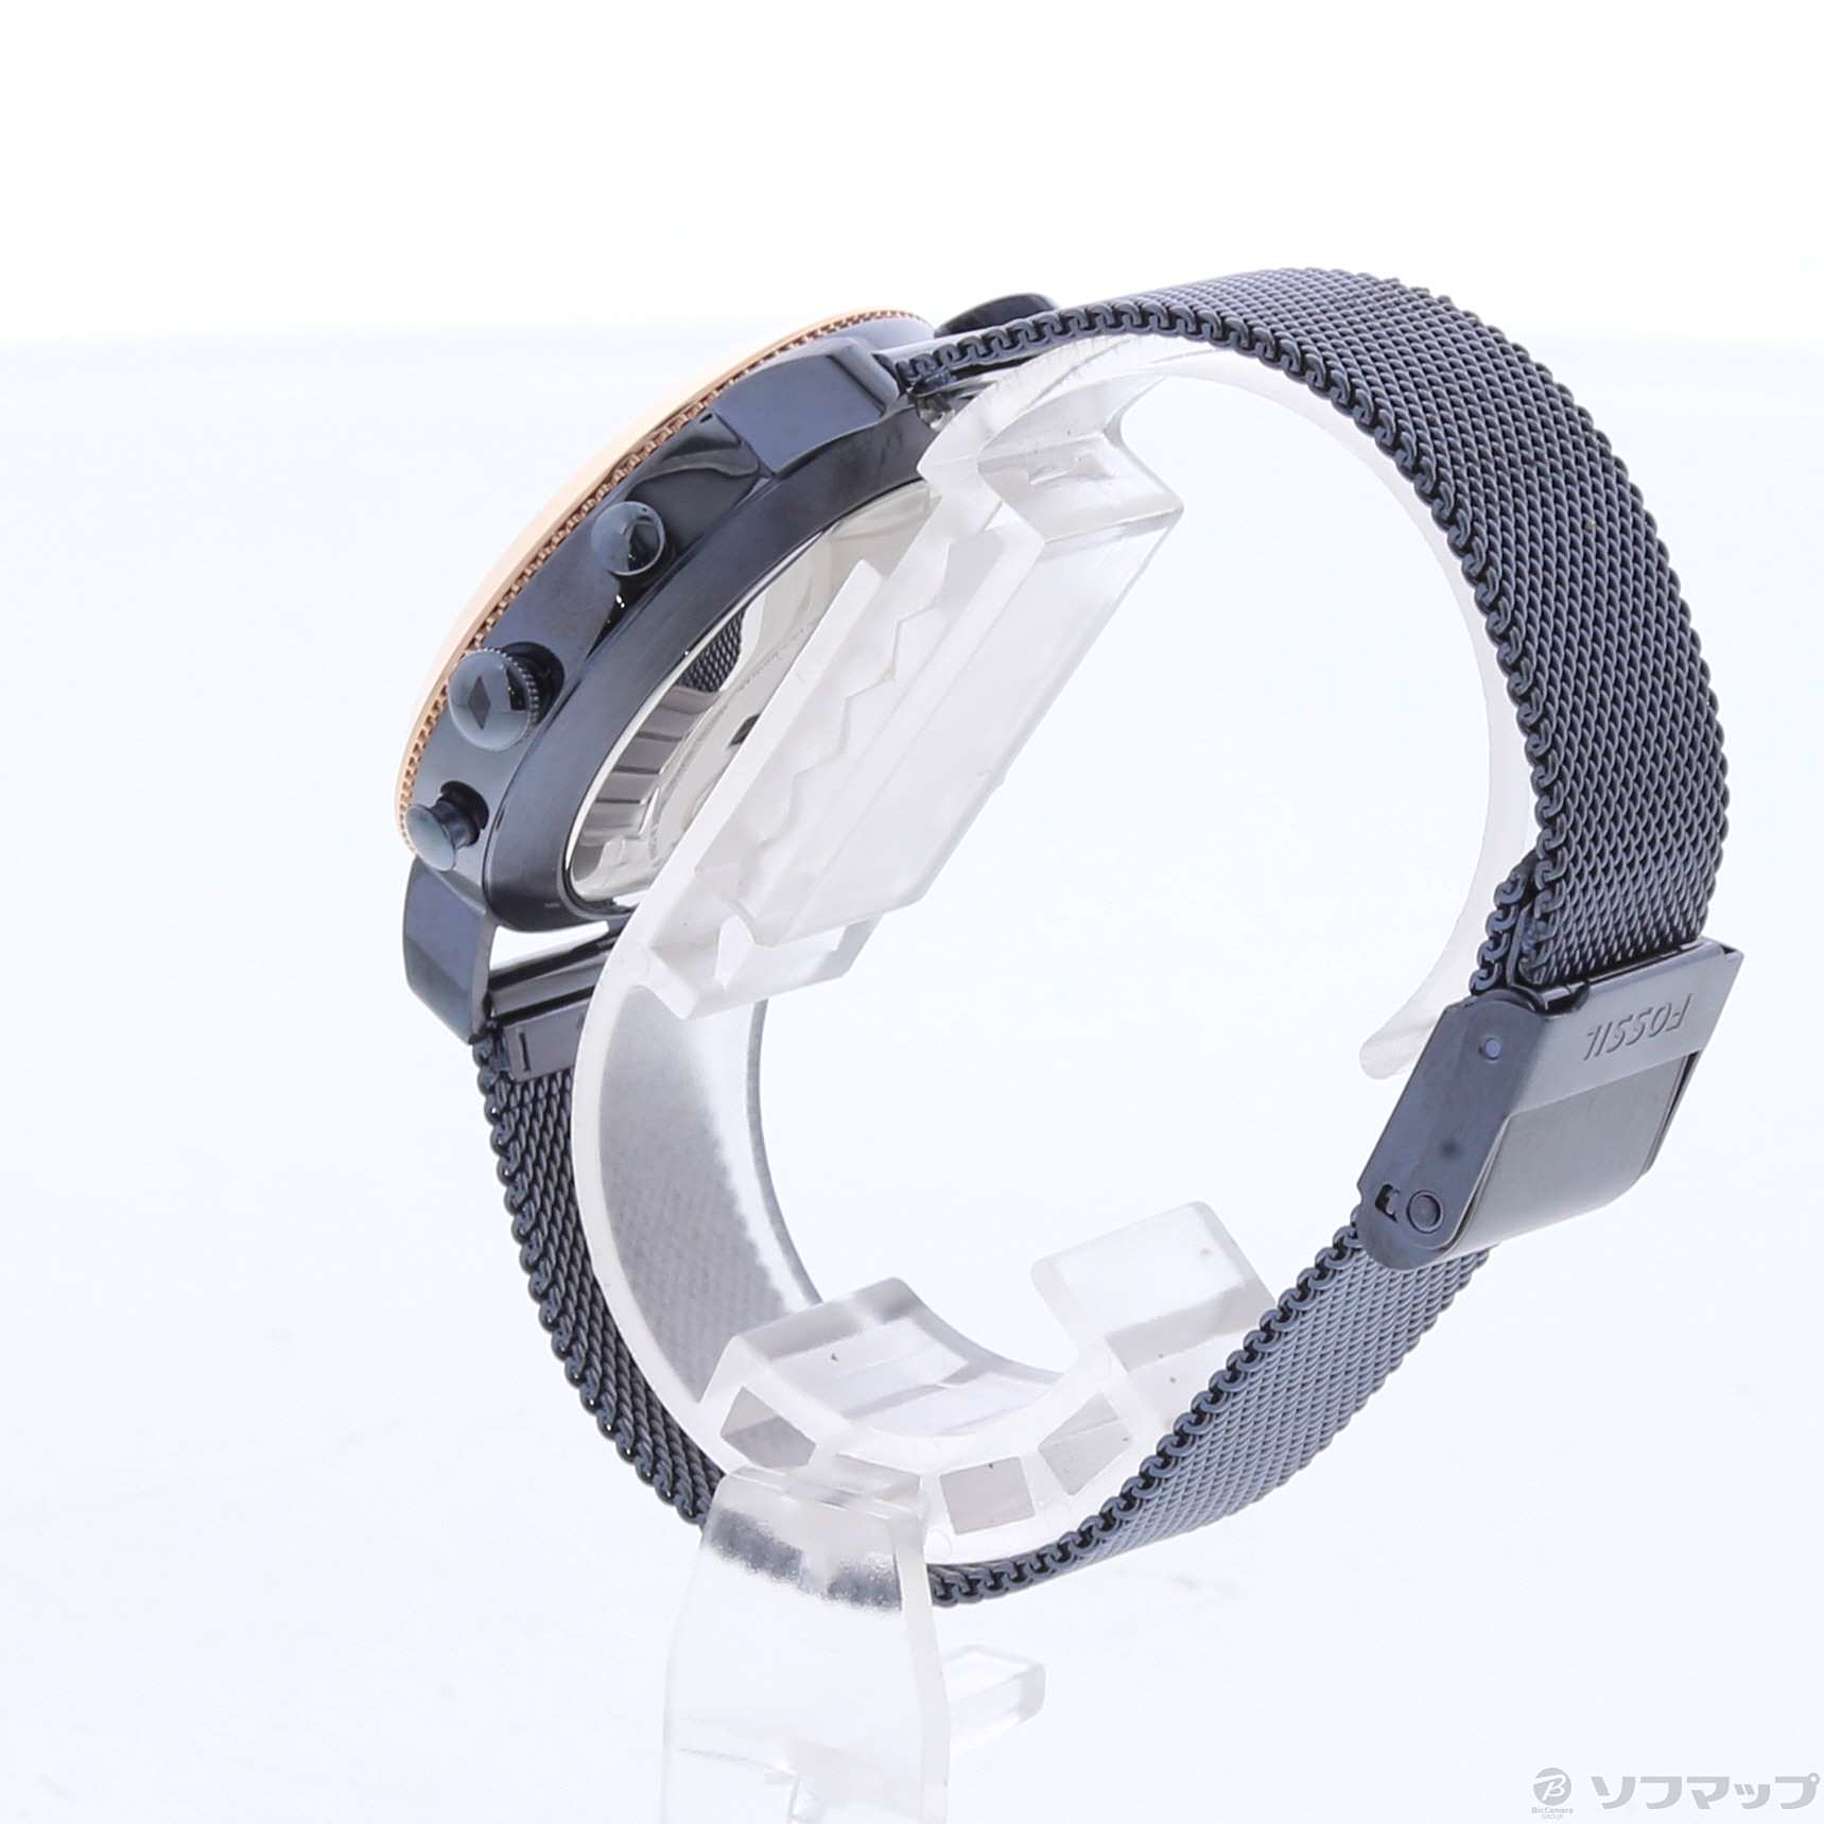 中古】〔展示品〕 FOSSIL Q Hybrid Smartwatch FTW5031 [2133028288339 